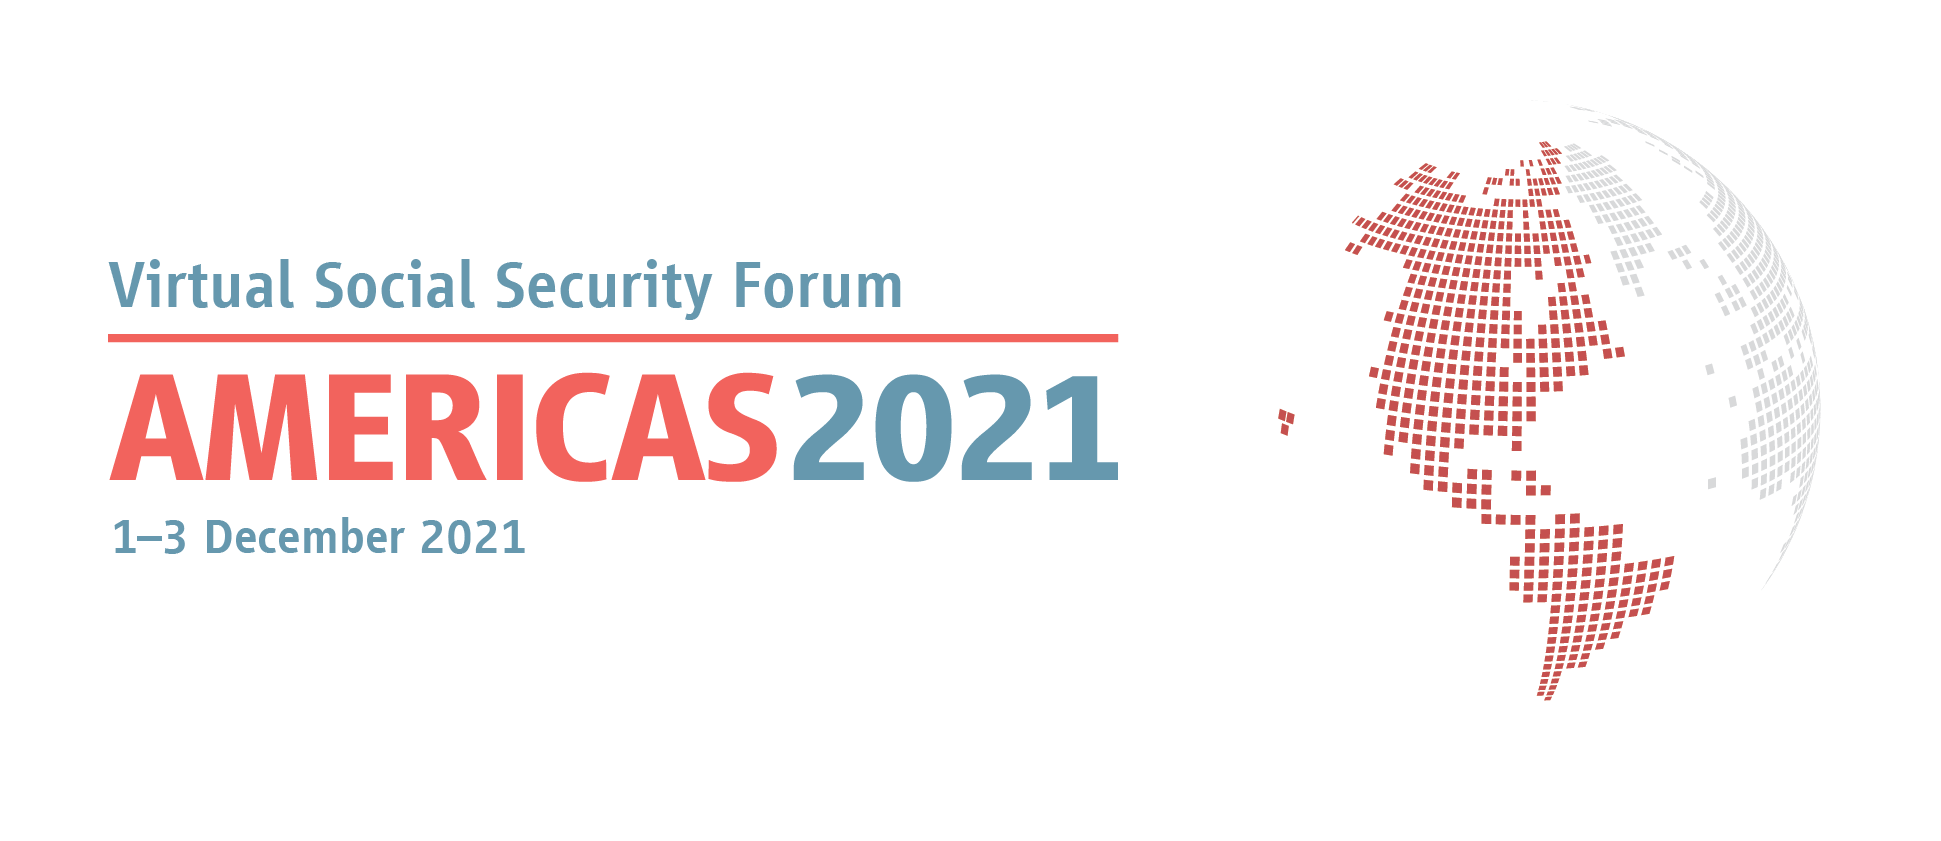 Virtual Social Security Forum for the Americas